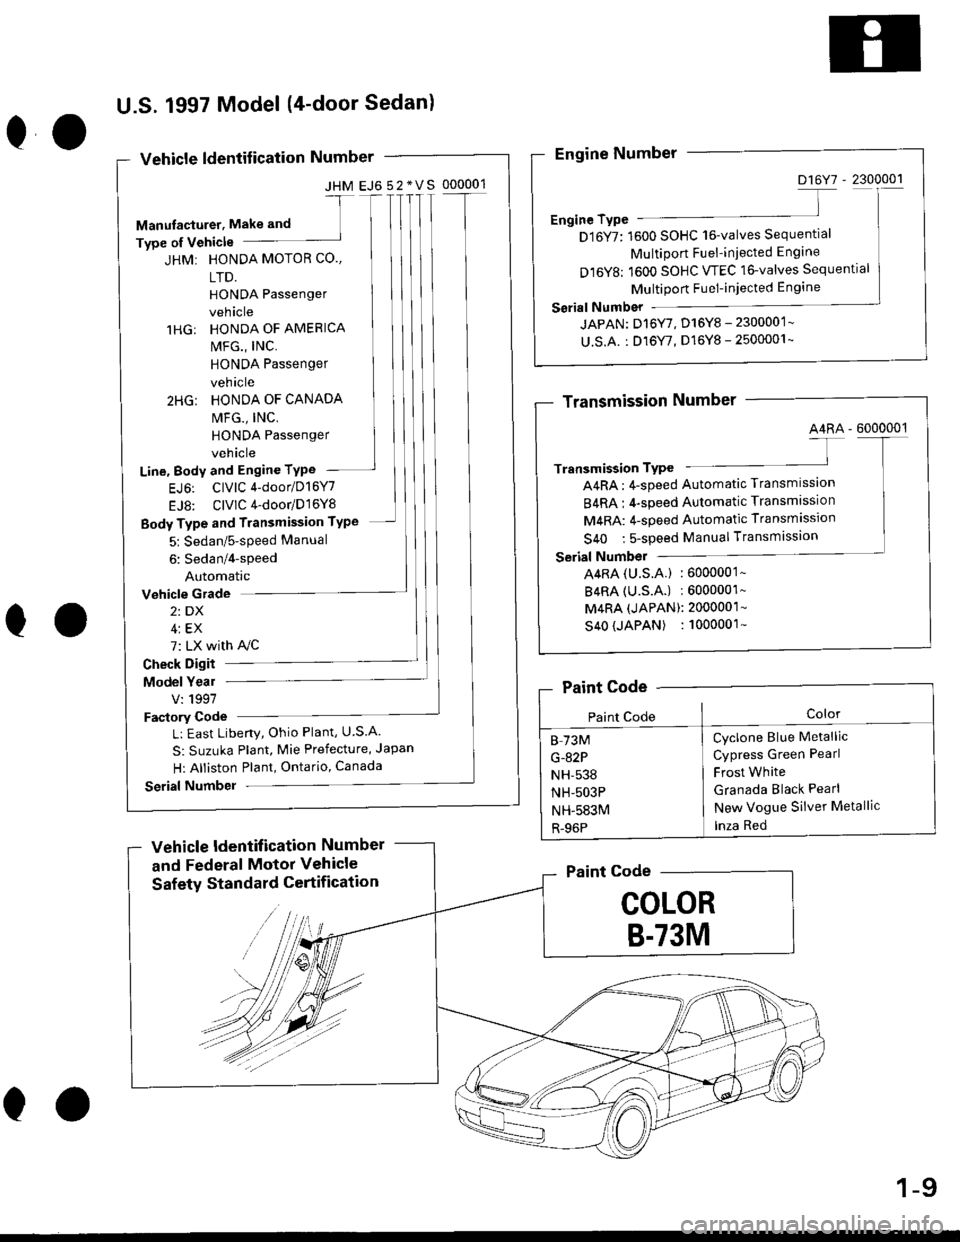 HONDA CIVIC 1998 6.G User Guide 00
U.S. 1997 Model (4-door Sedanl
Vehicle ldentif ication Number
JHM EJ6 52*VS 000001
Manulaqturer. Make and 
-t
Type of Vehicle
HONDA MOTOR CO.,
LTD.
HONDA Passenger
vehicle
HONDA OF AMERICA
MFG., IN